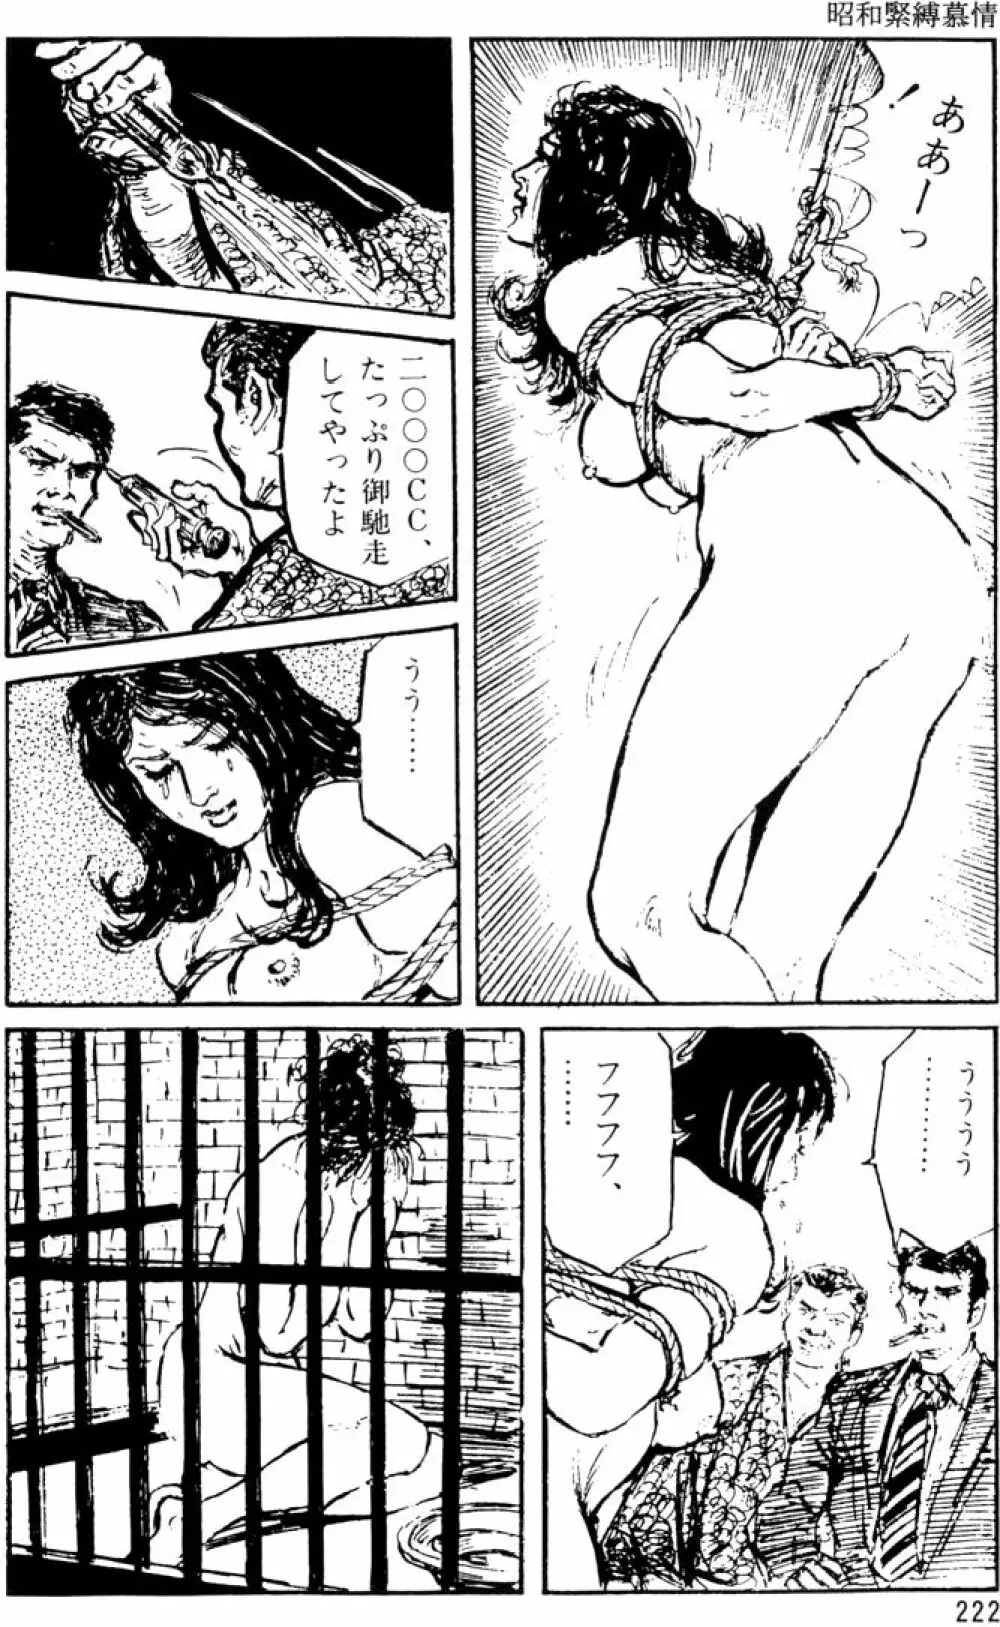 団鬼六原作劇画集成 191ページ